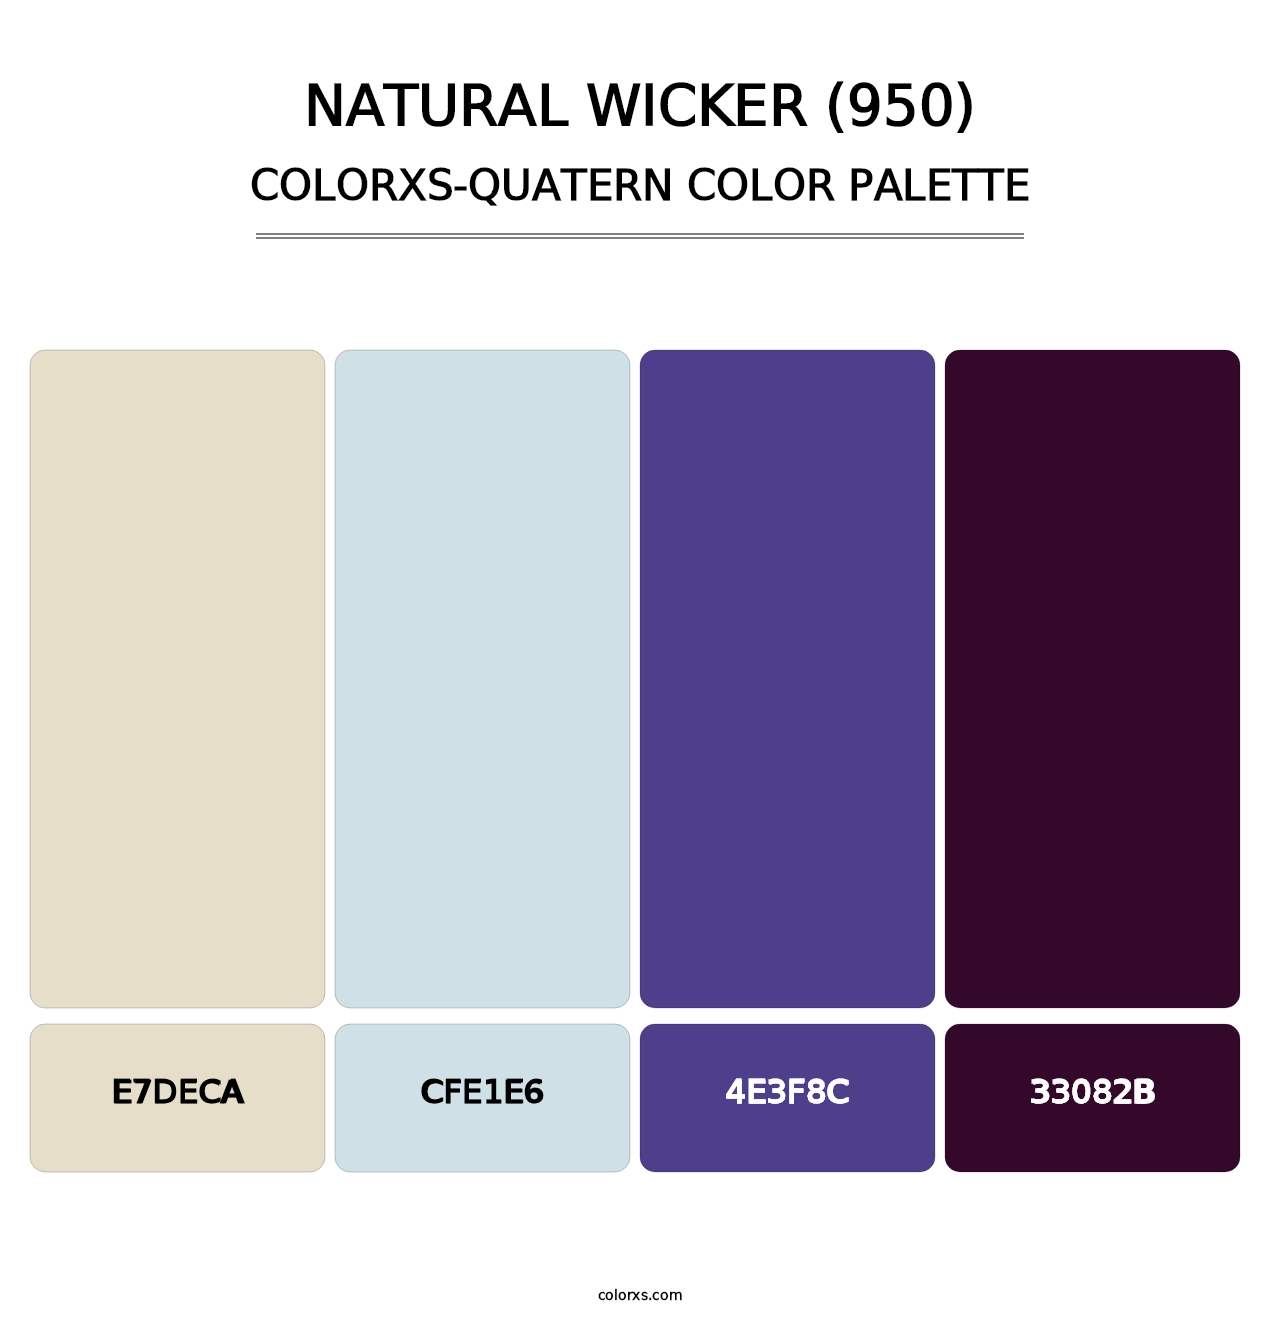 Natural Wicker (950) - Colorxs Quatern Palette